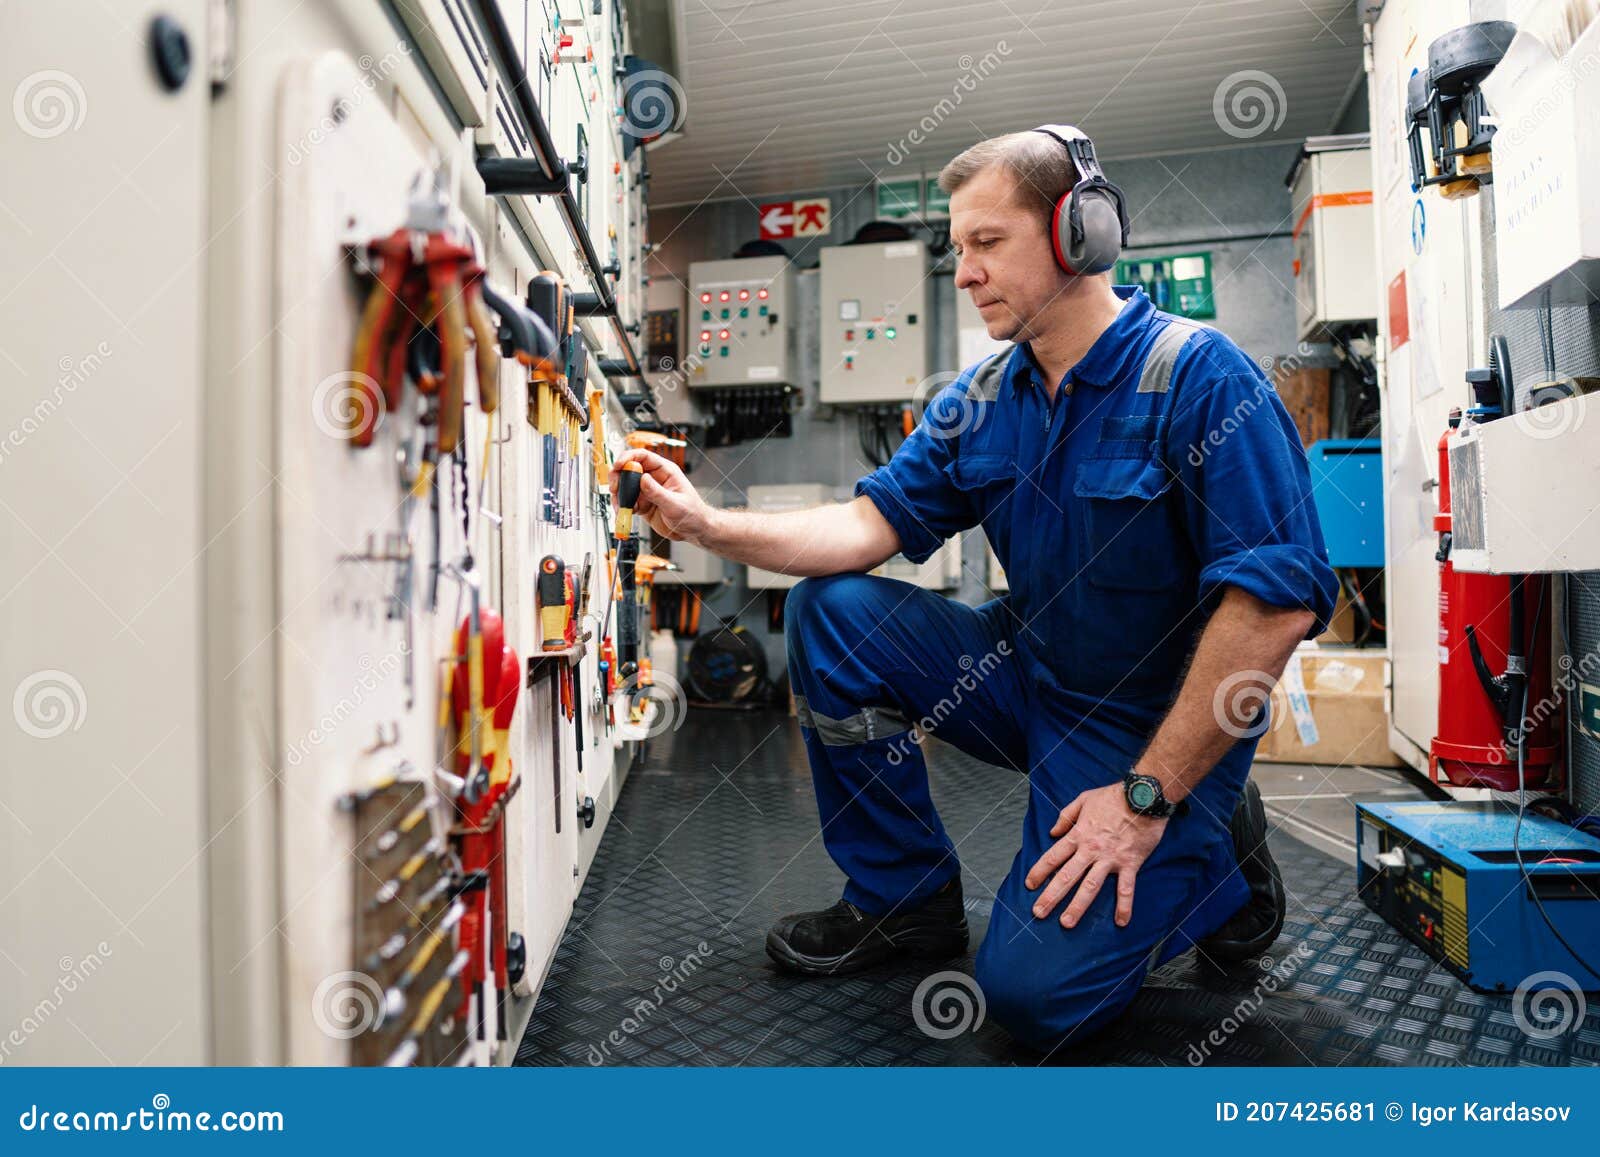 Marine Engineer Officer in Engine Control Room ECR. he Works in Workshop  Stock Image - Image of control, engine: 207425681